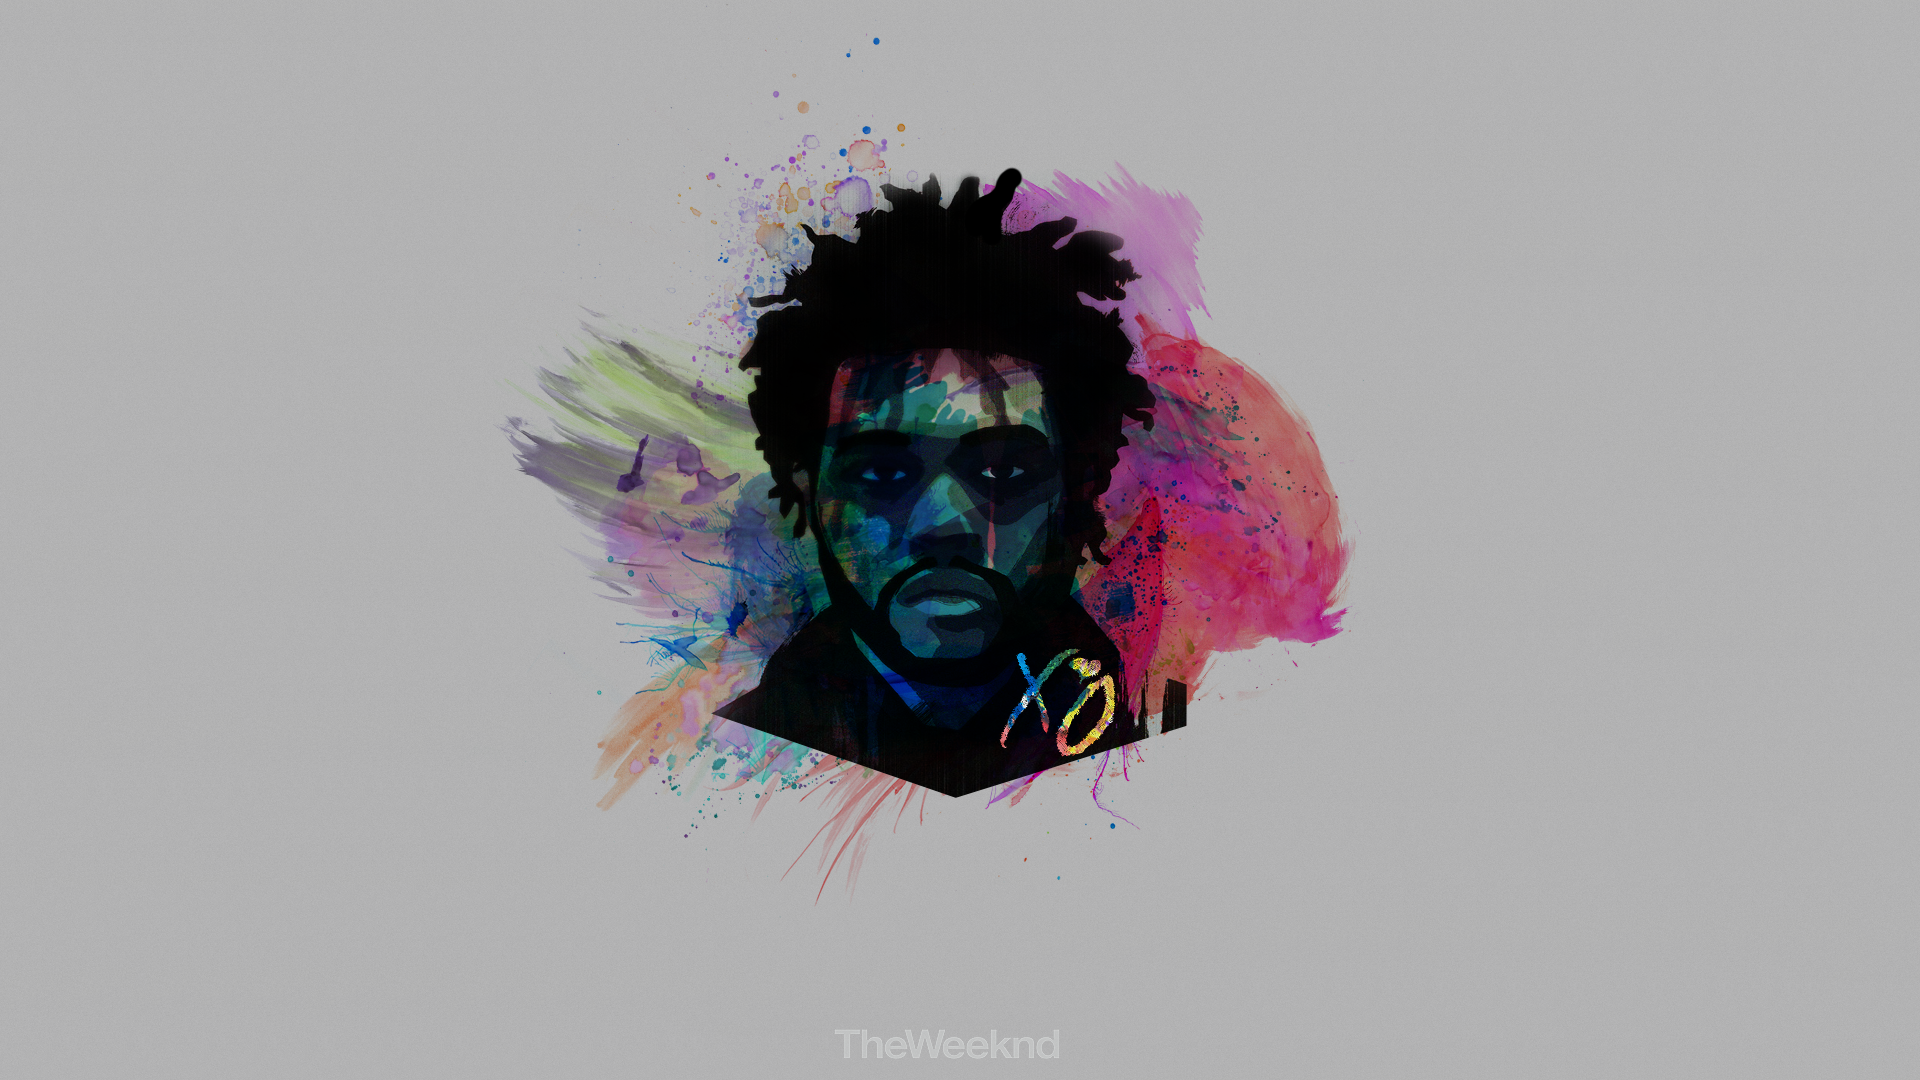 49+] The Weeknd Desktop Wallpaper - WallpaperSafari